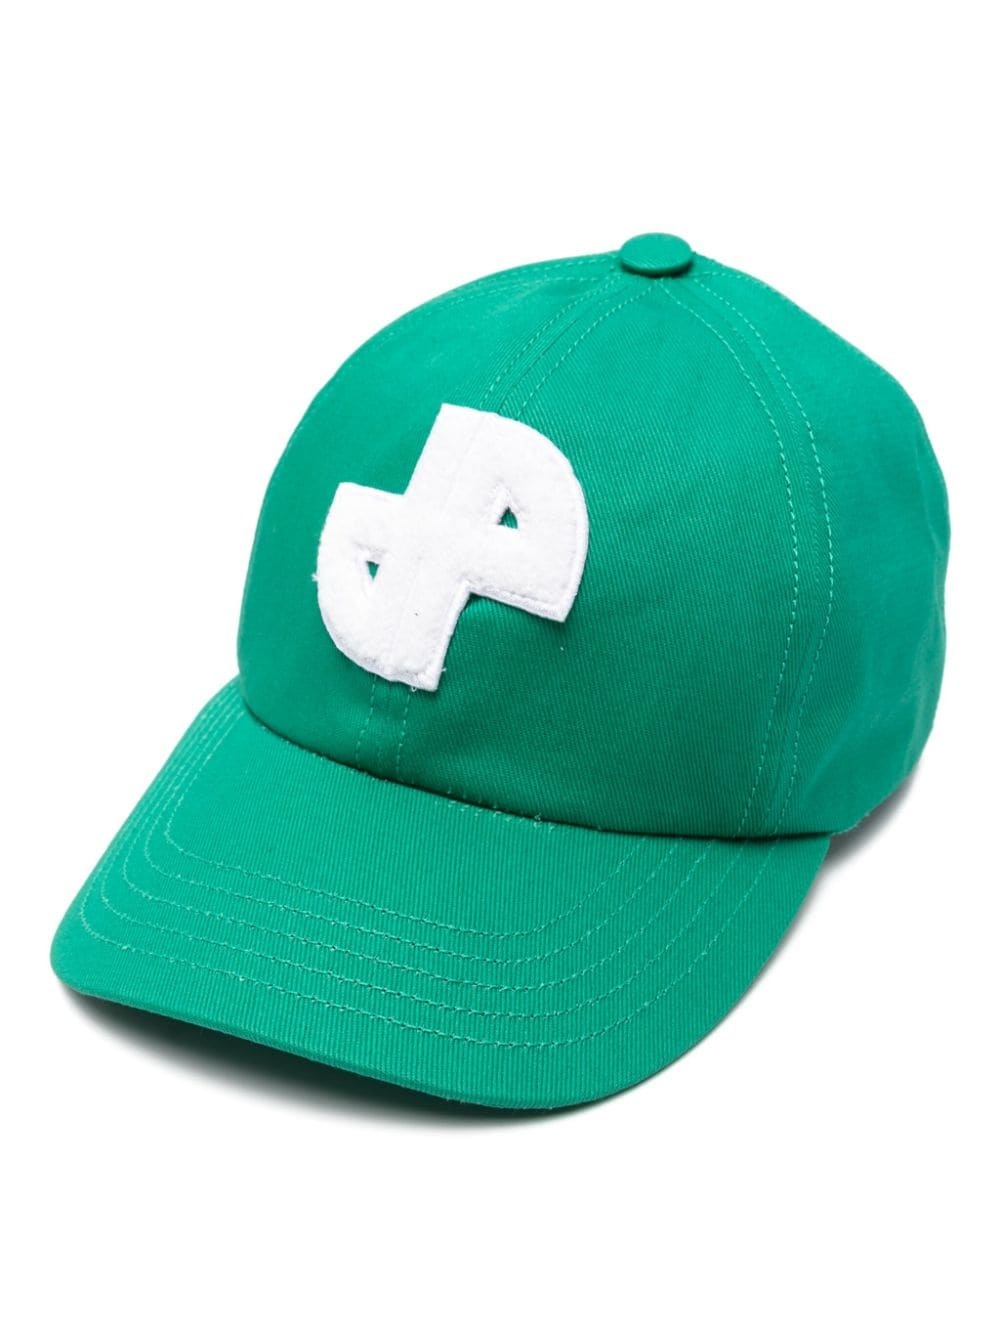 JP cotton baseball cap - 1